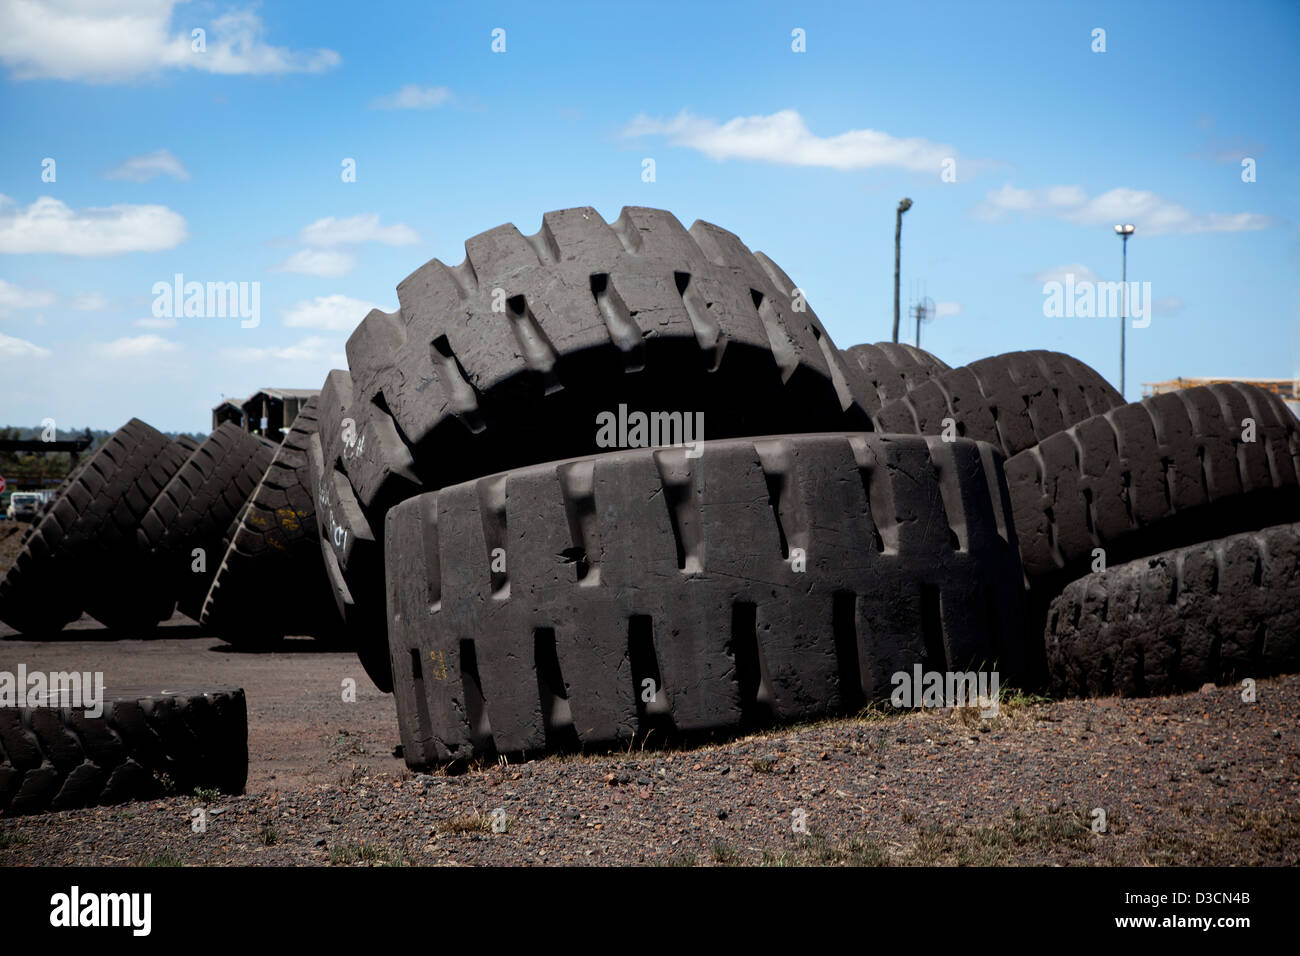 Mining truck tyres Stock Photo - Alamy